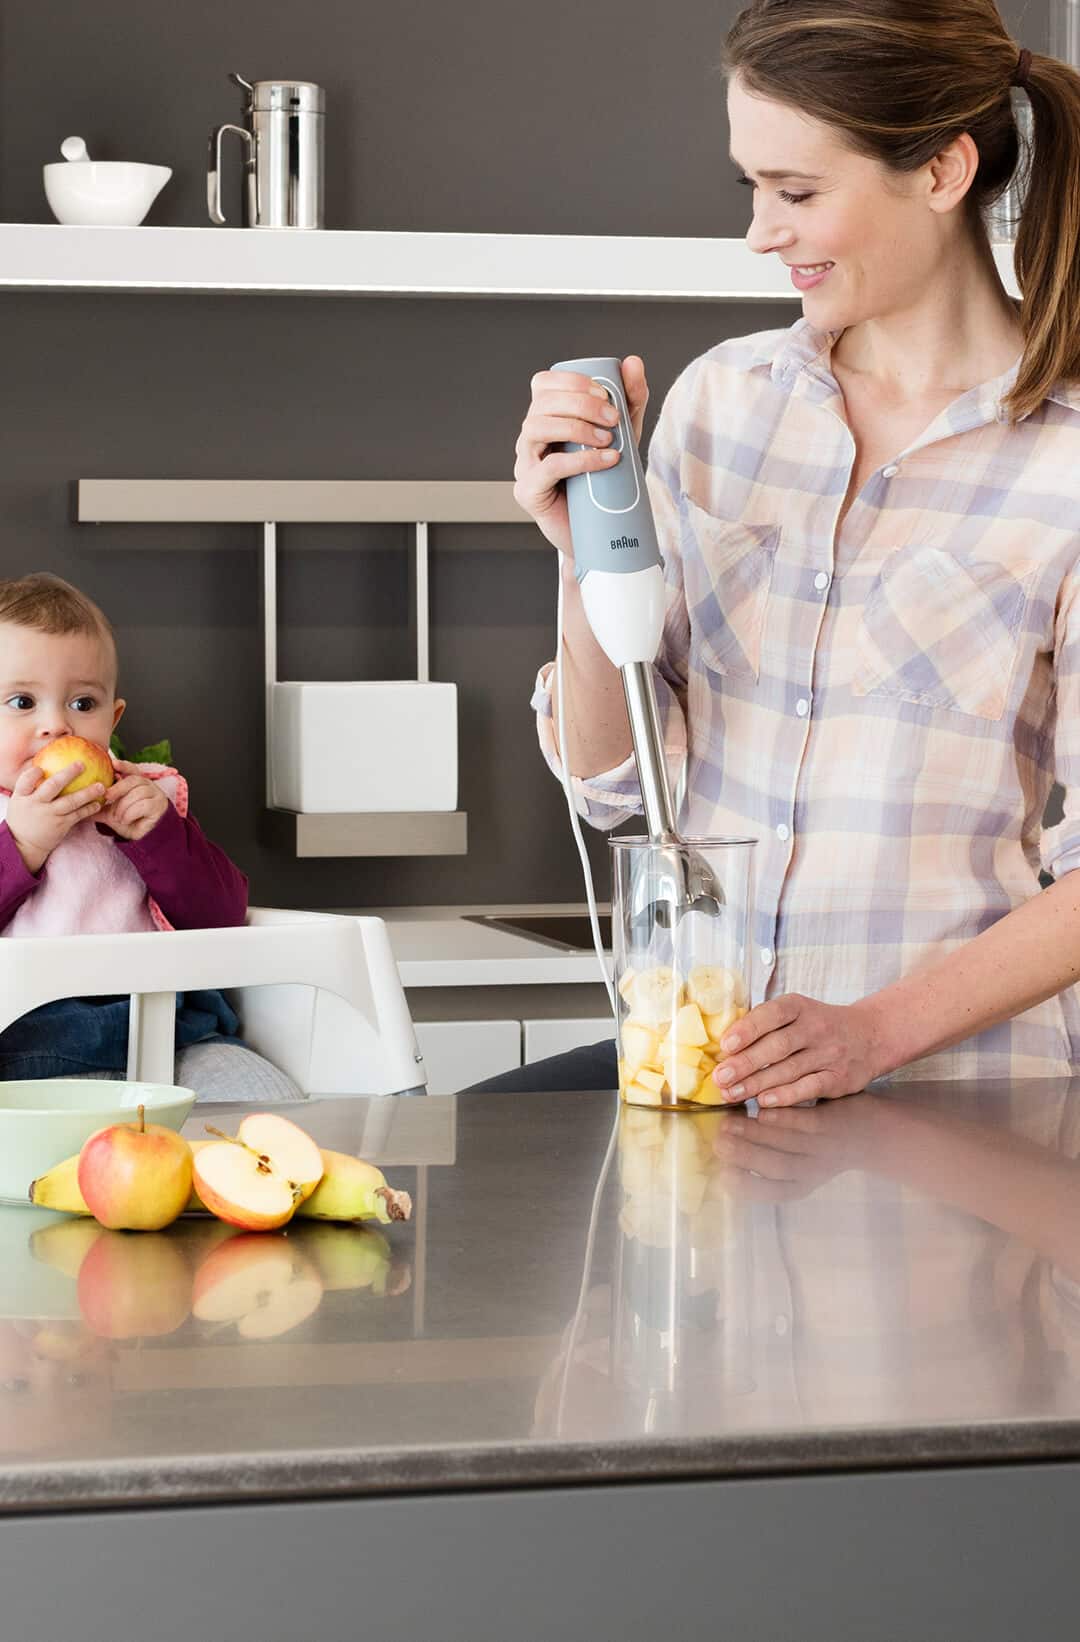 Baby Food Maker - Immersion Hand Blender and Food Processor - Puree & Blend